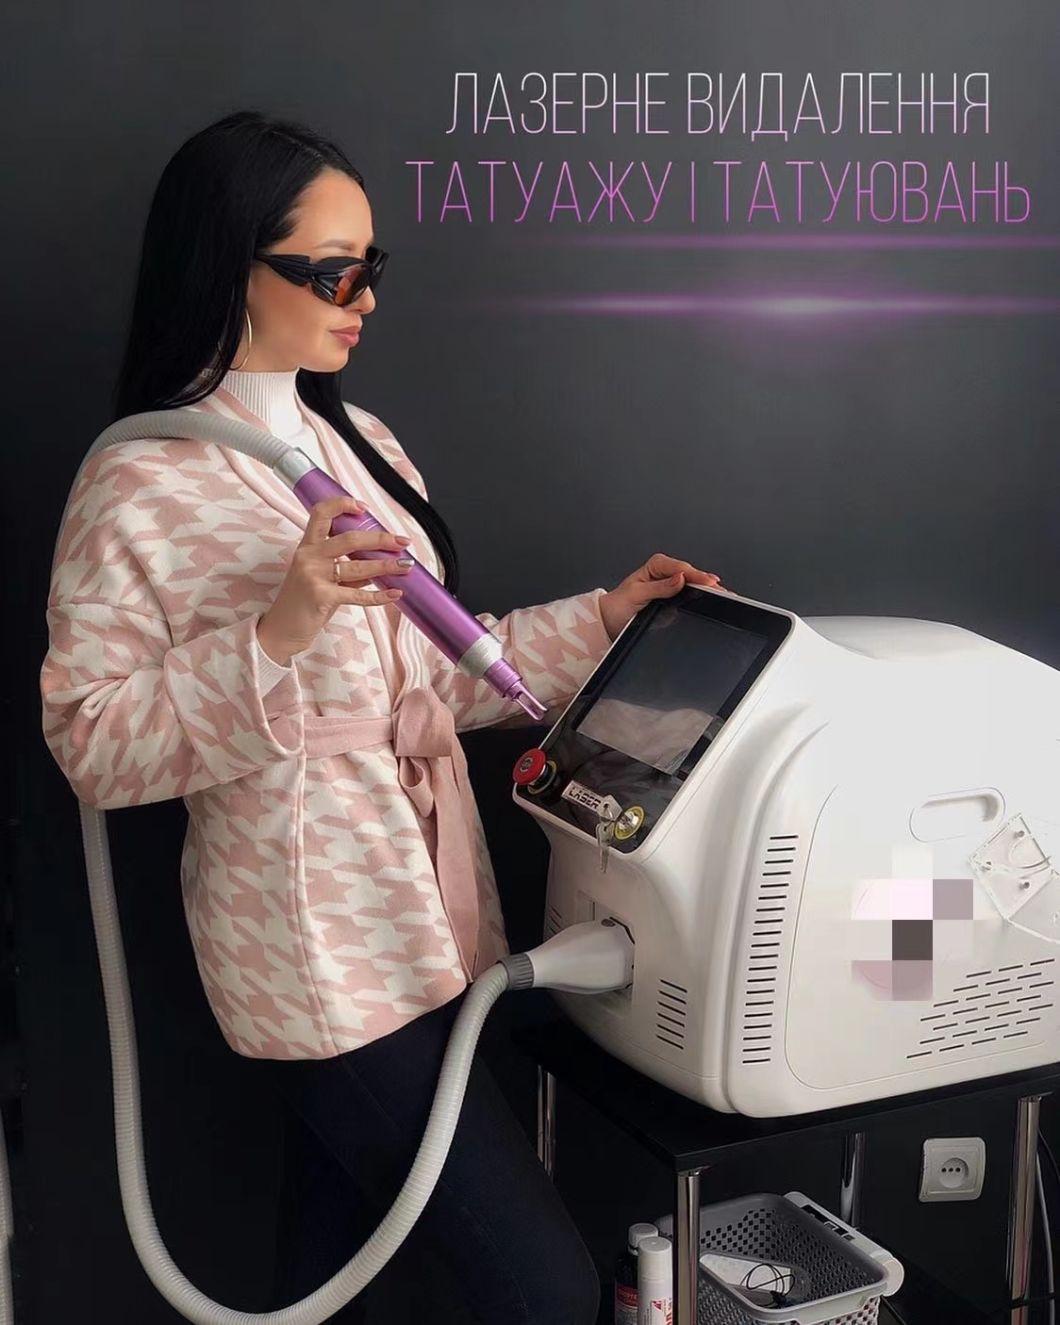 Multi Beauty Machine Picosecond ND YAG Laser Tattoo Removal Carbon Peeling Skin Whitening Skin Rejuvenation Pico Laser Machine